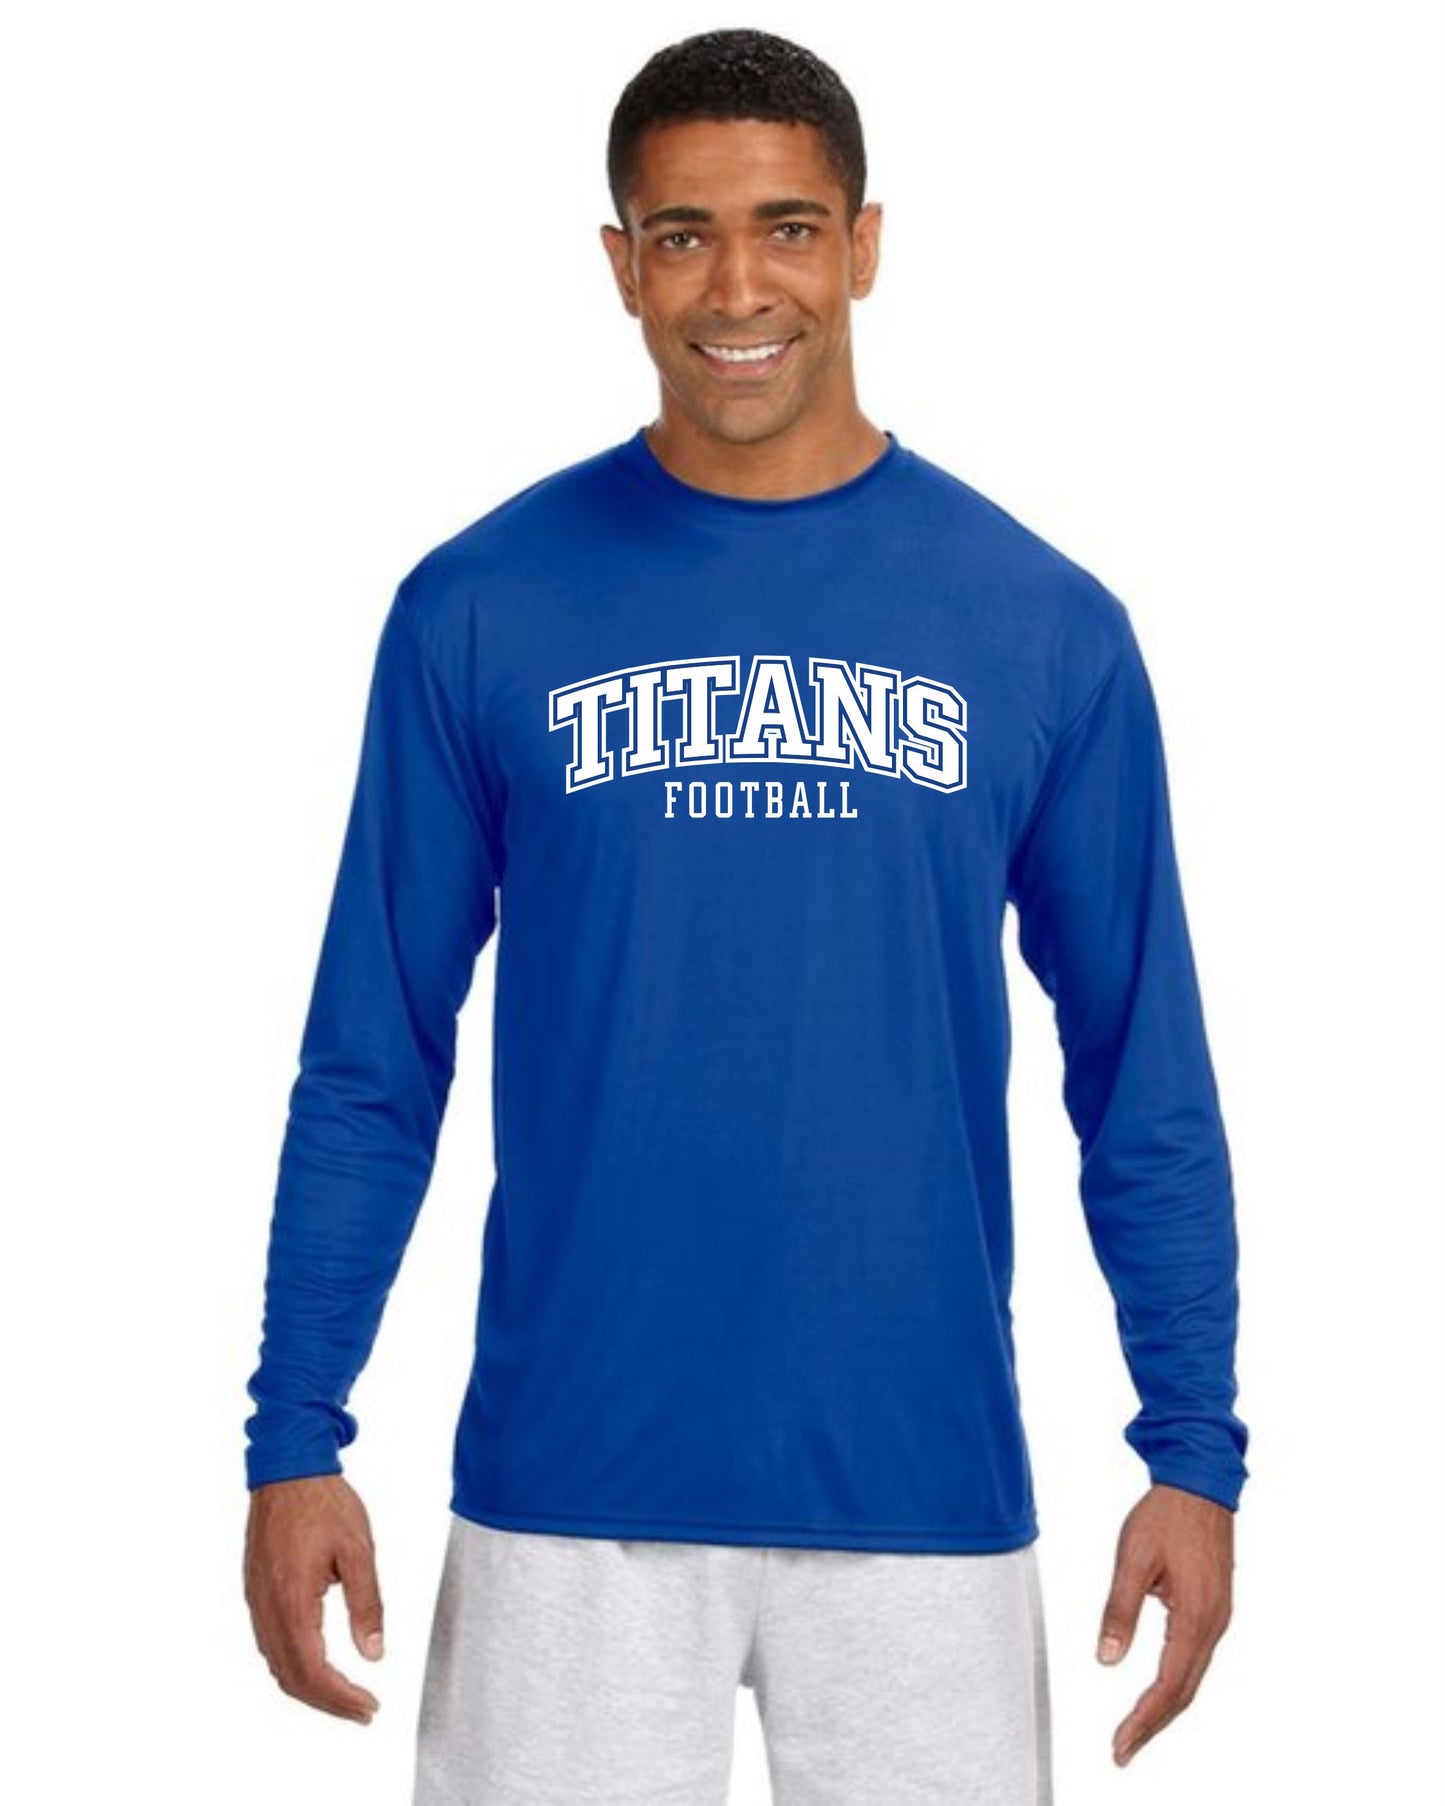 Titans Football Block T-Shirt